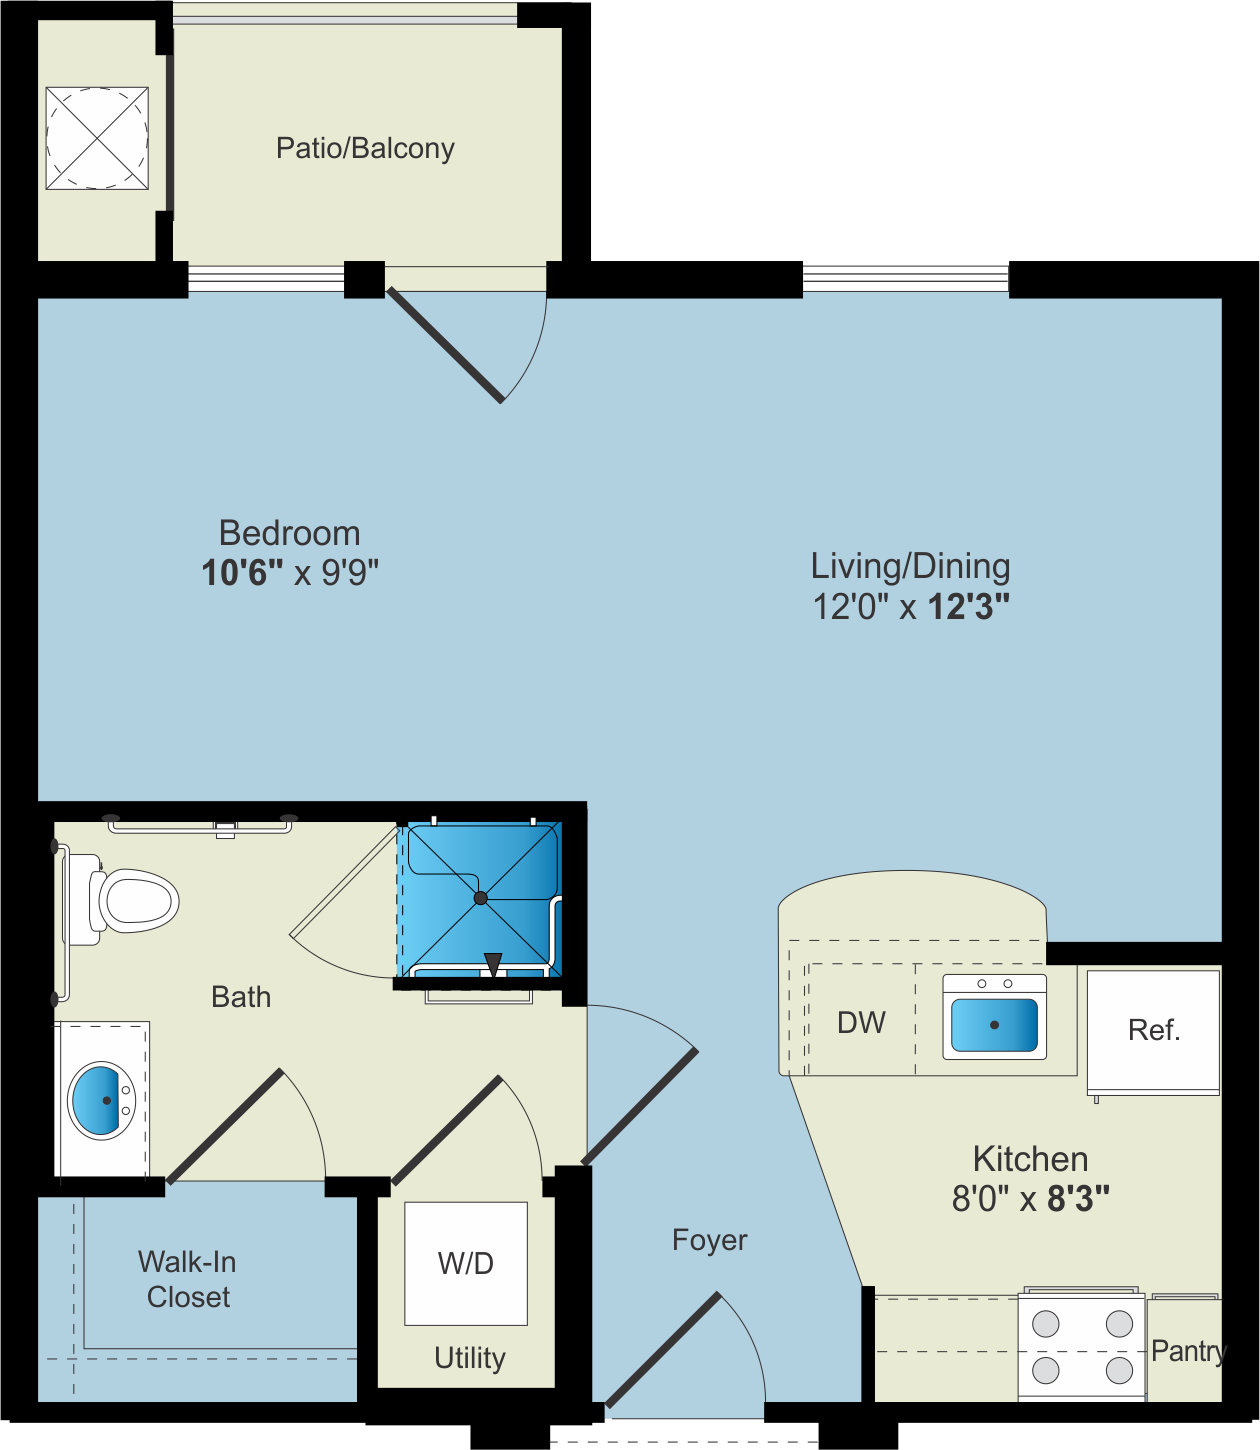 A floor plan for an Apartment.